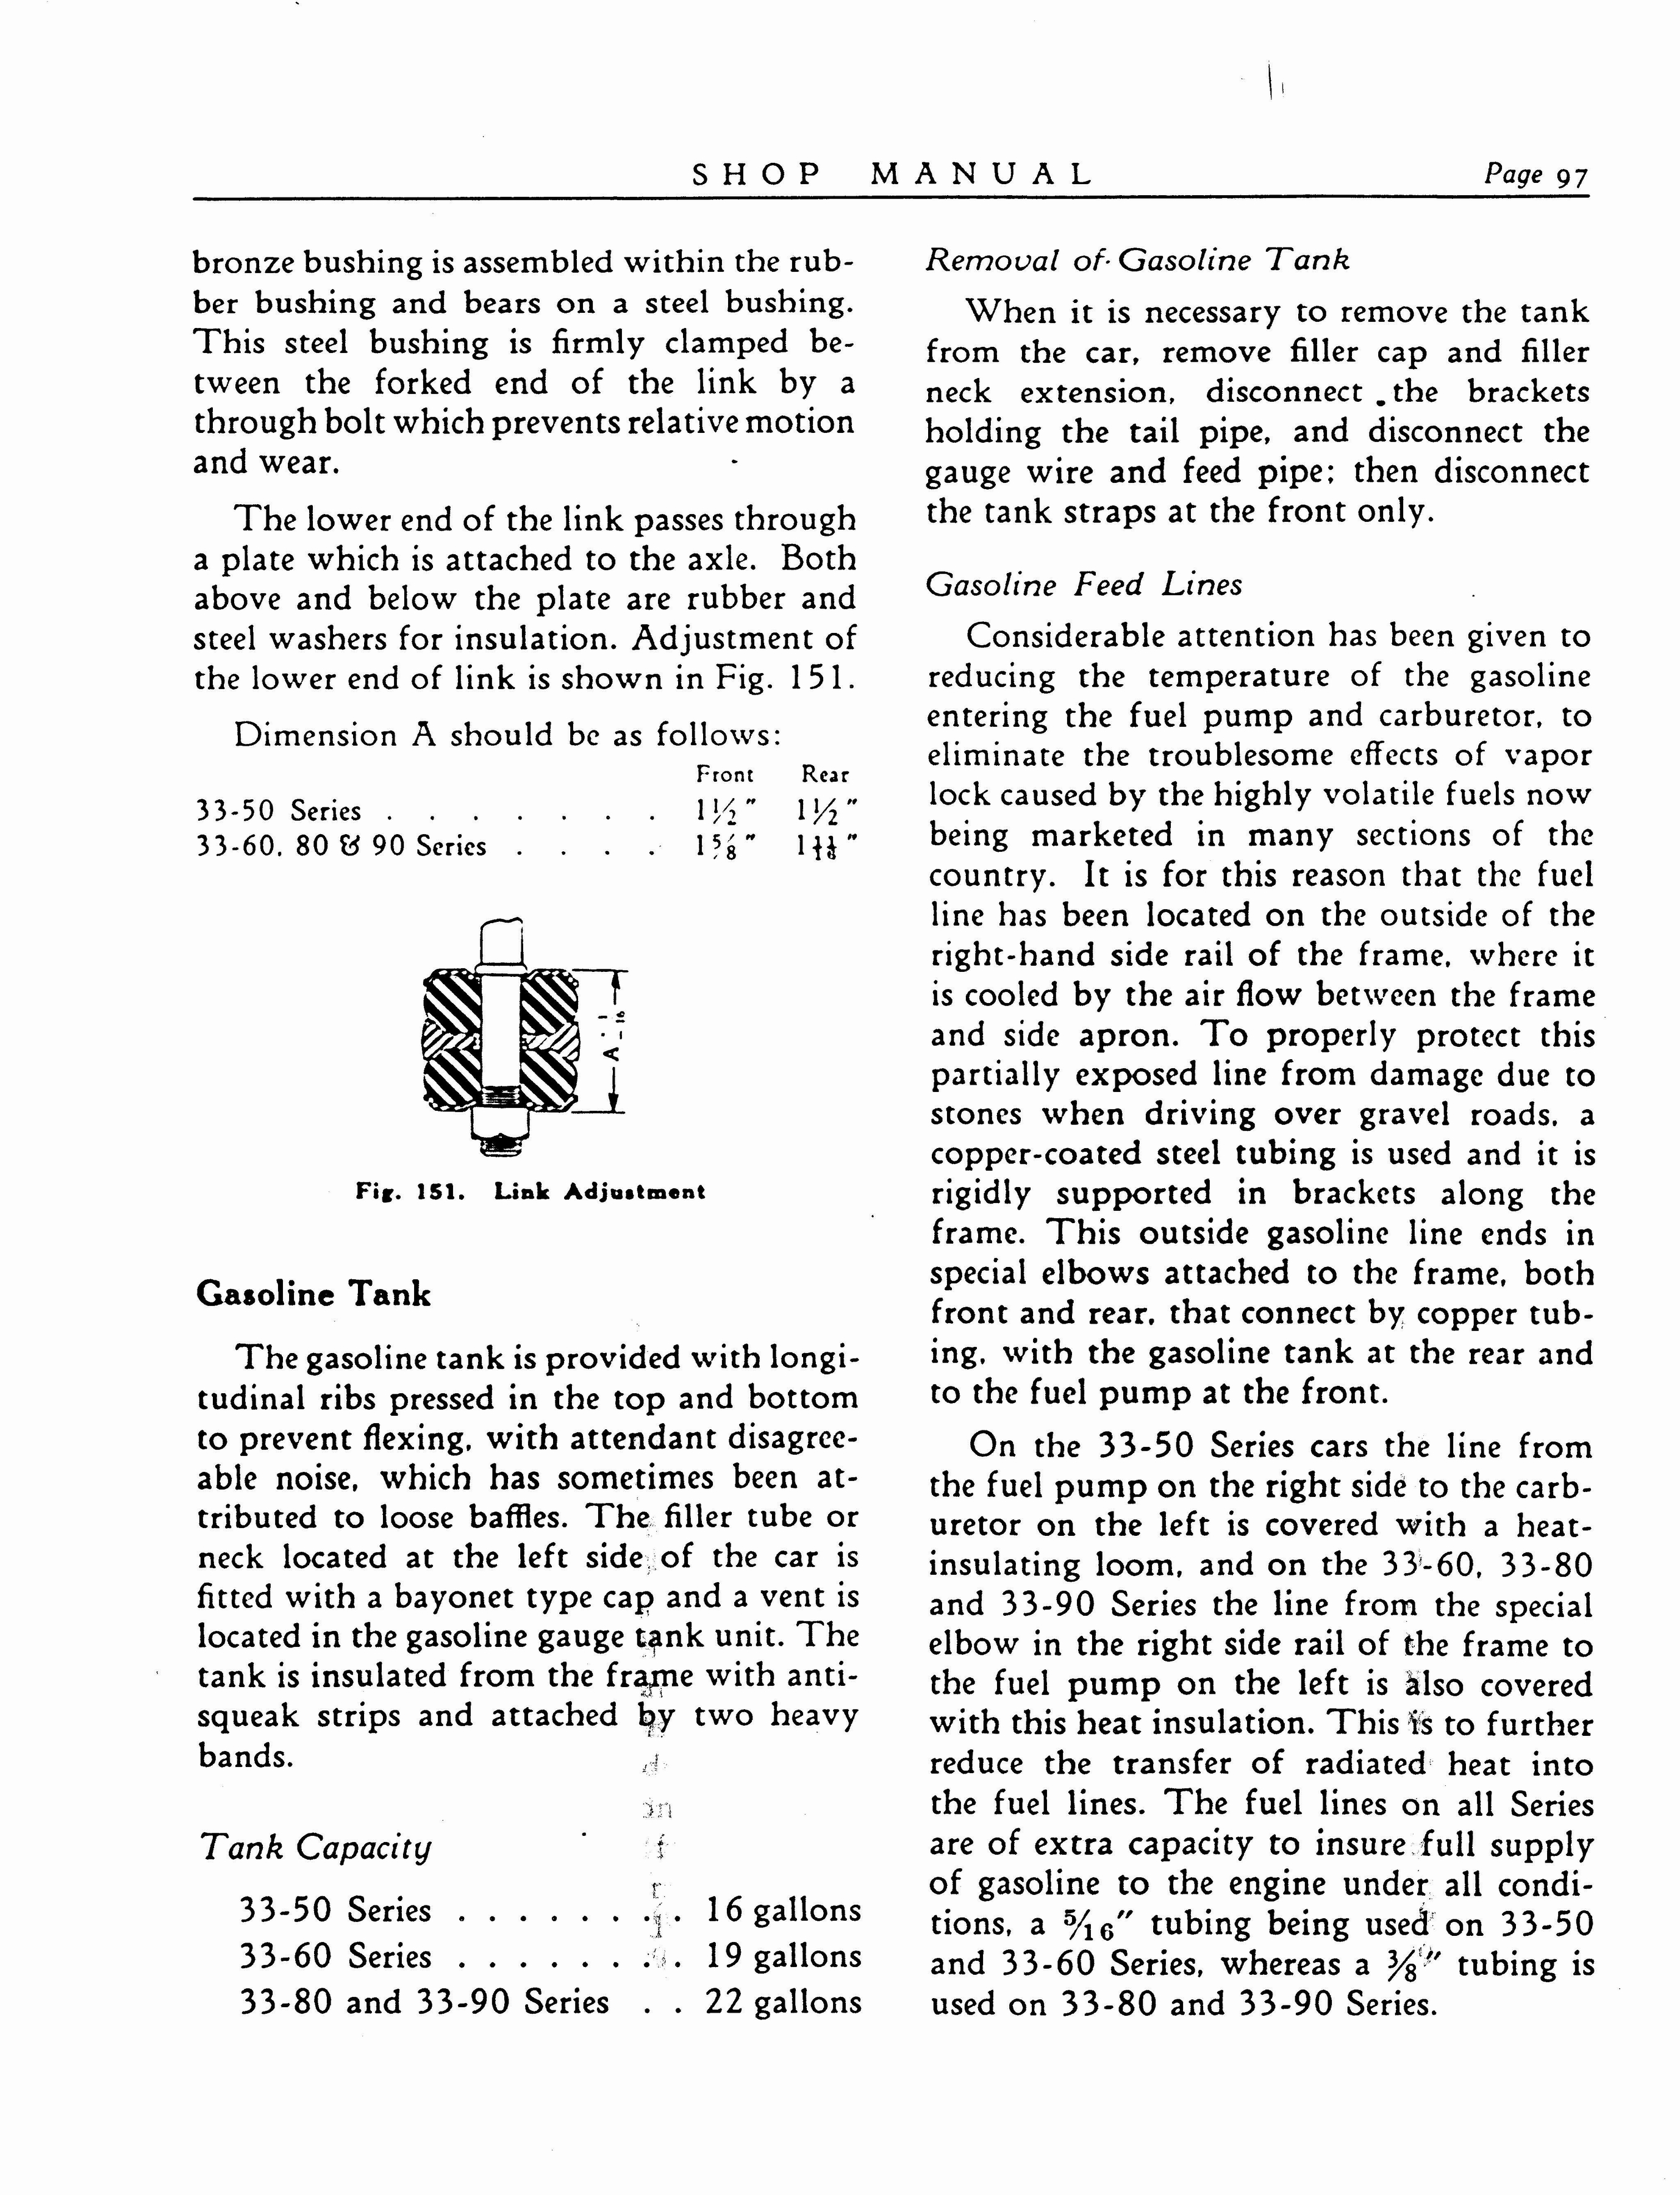 n_1933 Buick Shop Manual_Page_098.jpg